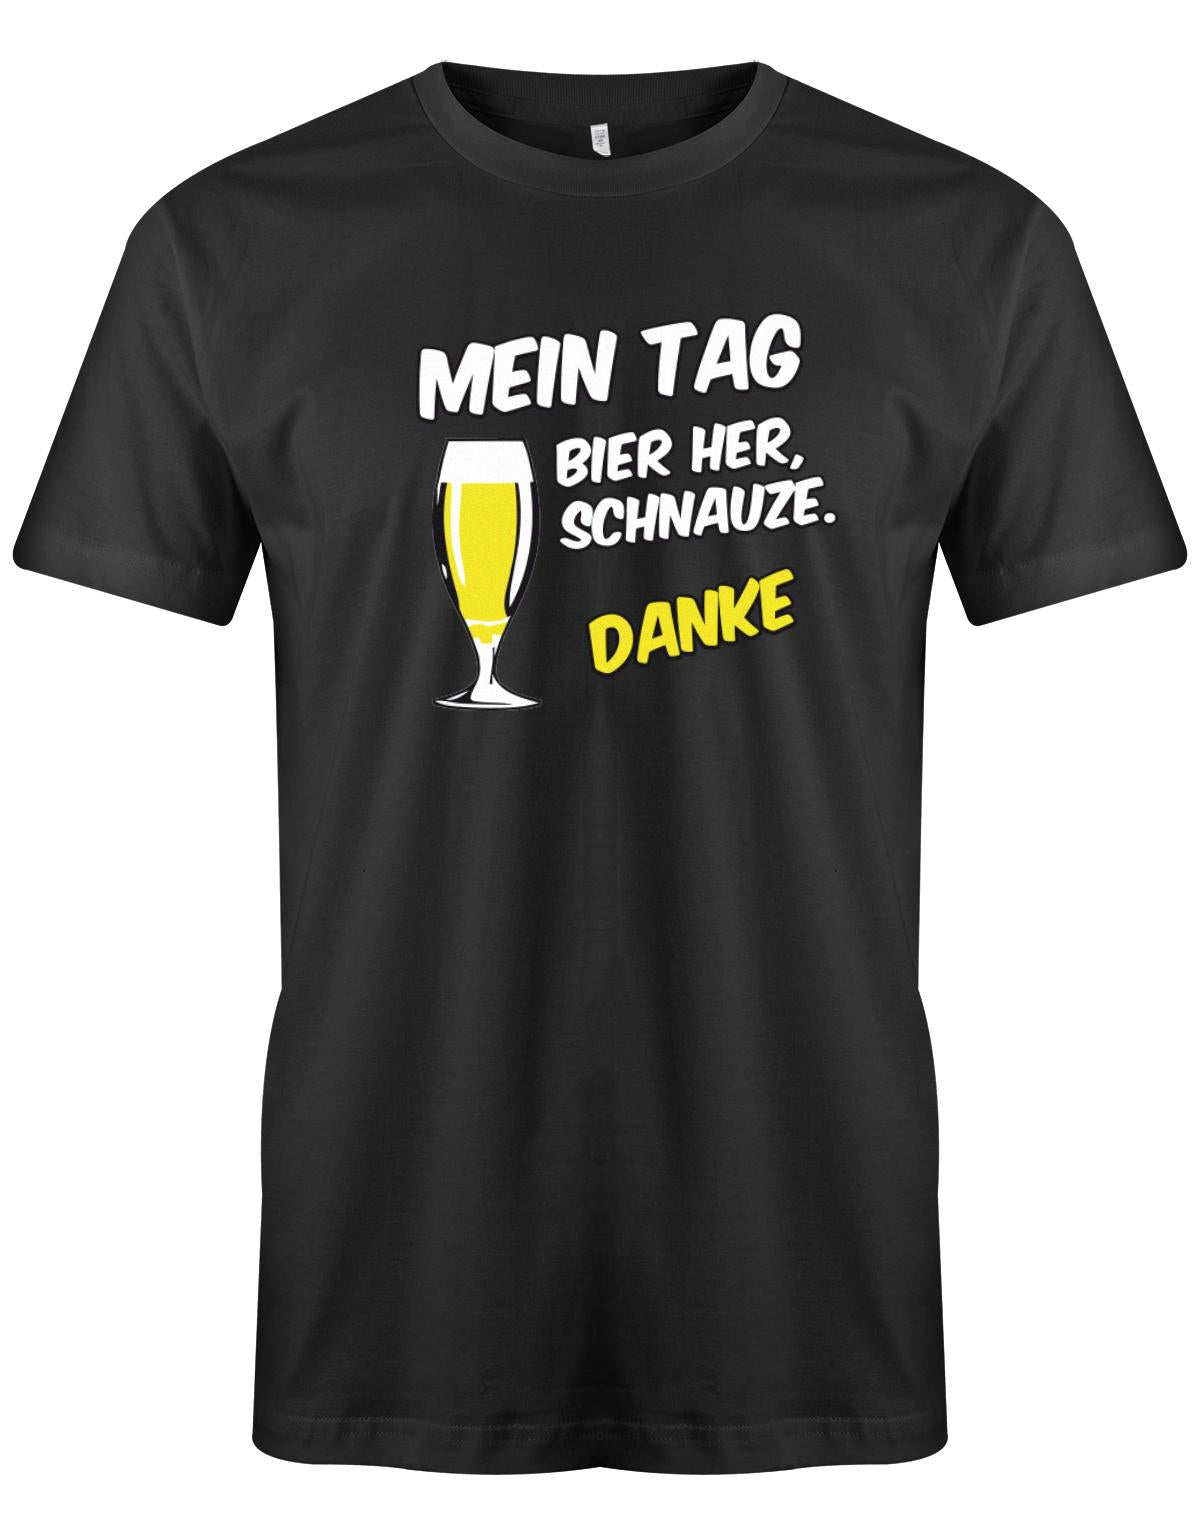 Mein-Tag-Bier-Her-Schnauze-Danke-Vatertag-Herren-Shirt-SChwarz